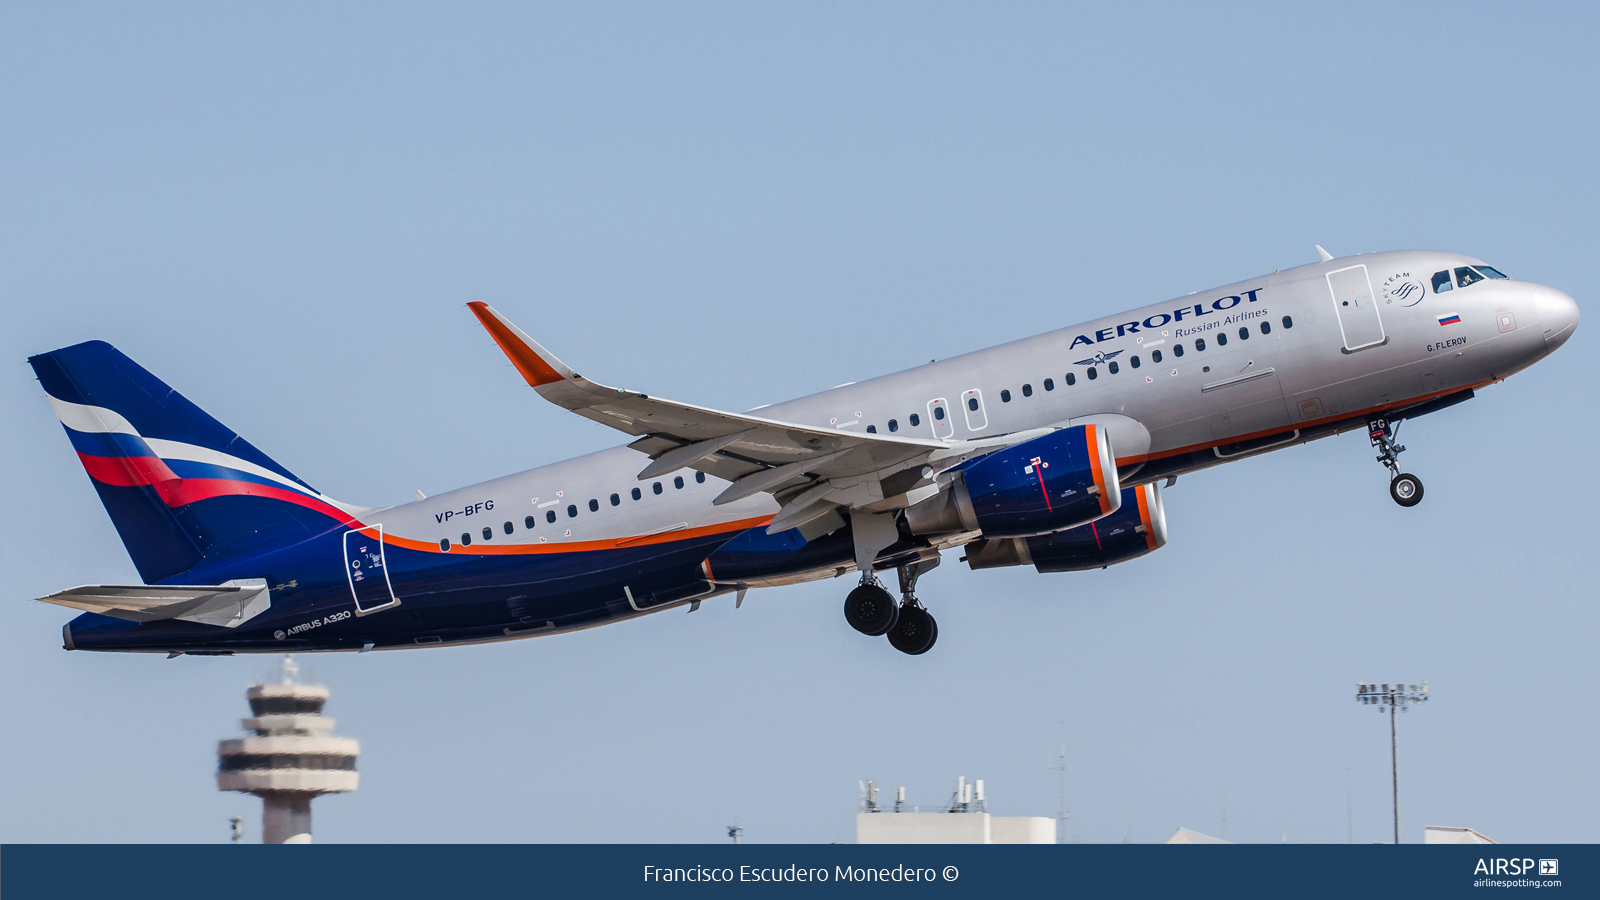 Aeroflot  Airbus A320  VP-BFG